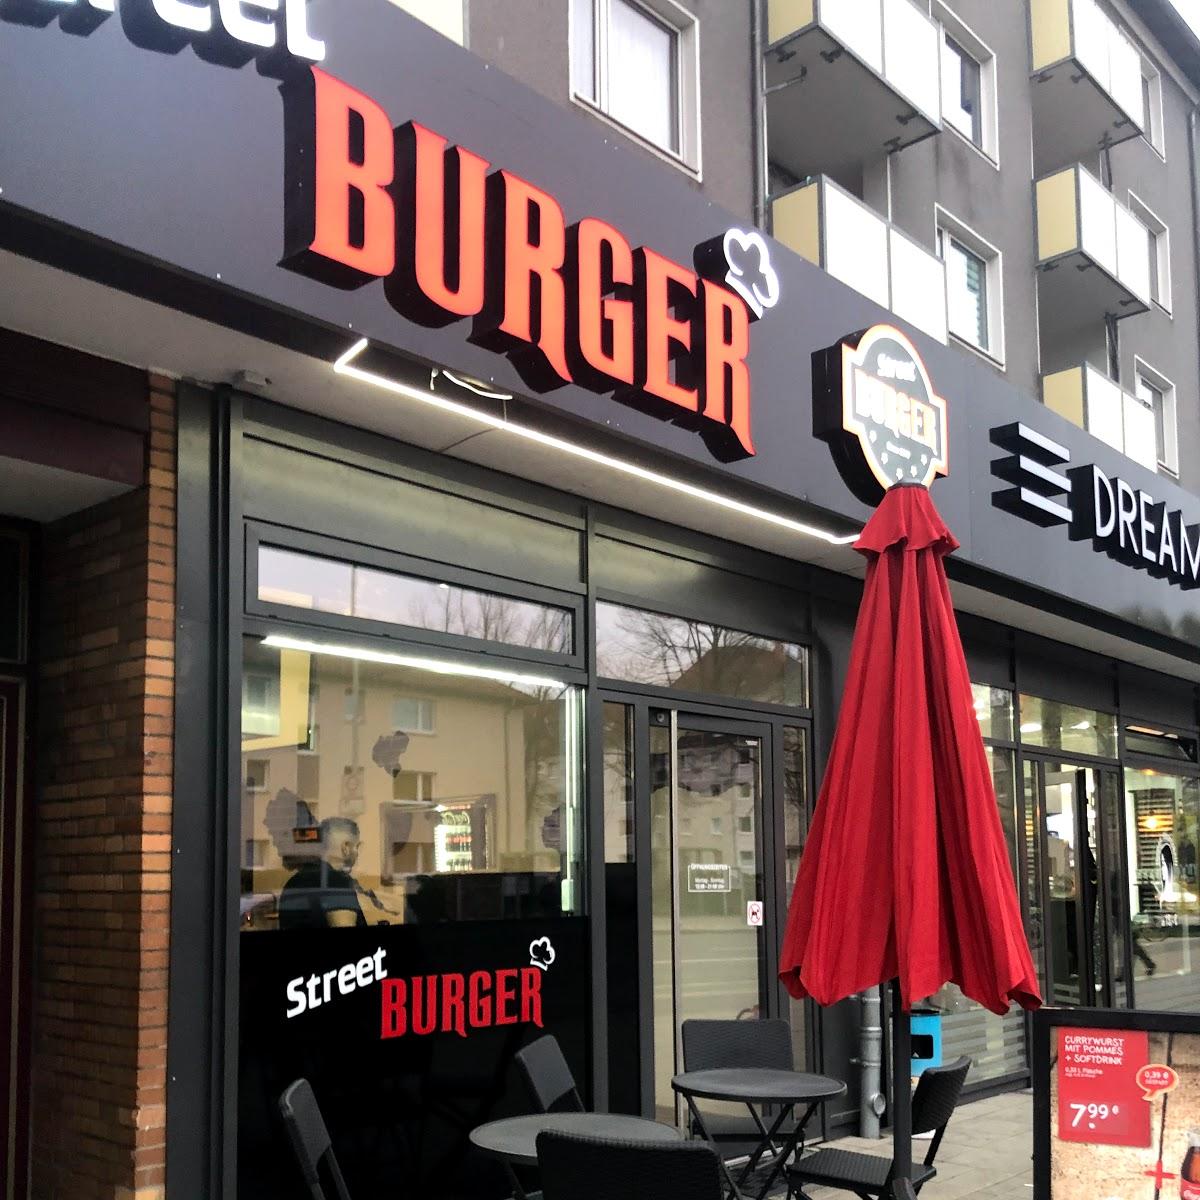 Restaurant "Street Burger" in Hannover